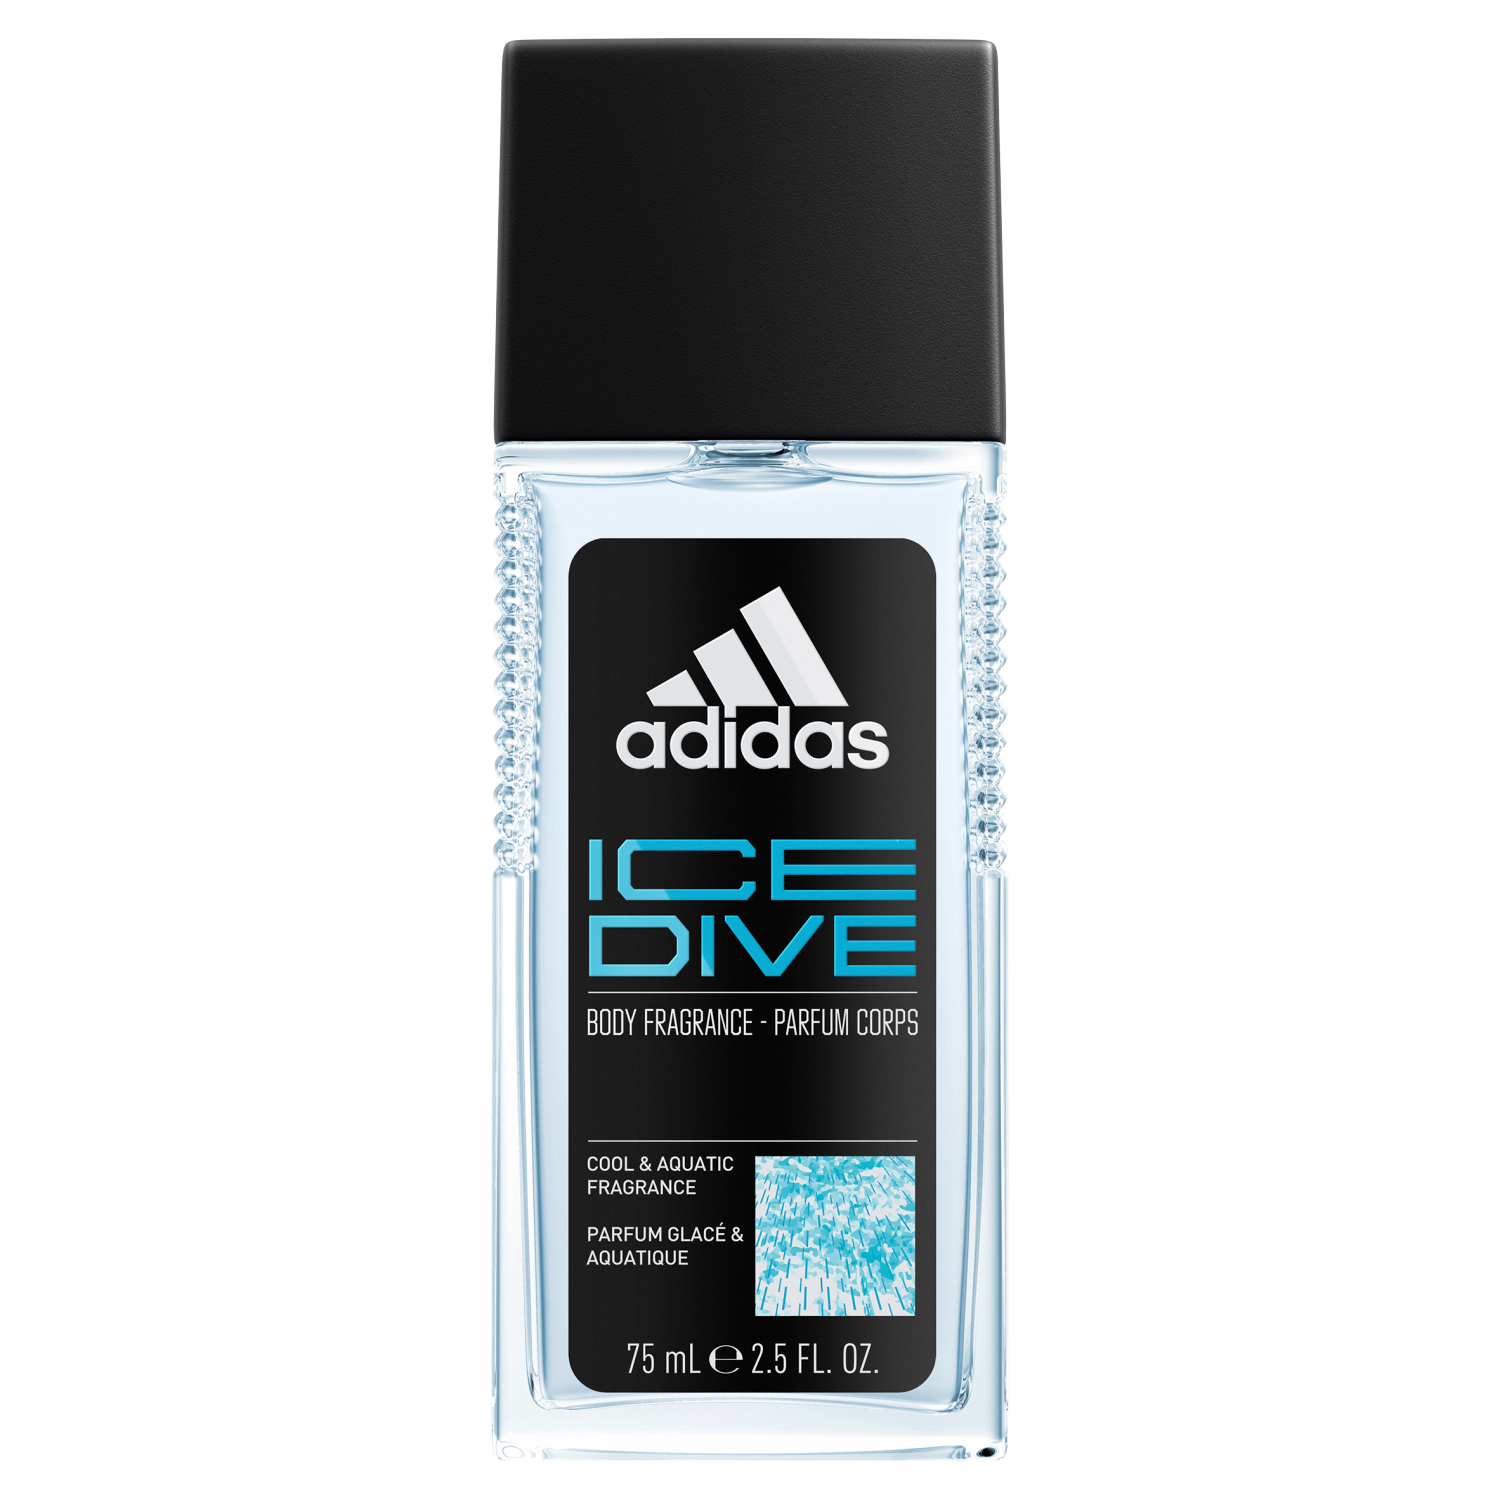 Adidas Ice Dive ароматизированный дезодорант для тела для мужчин, 75 мл adidas adidas дезодорант стик для мужчин ice dive